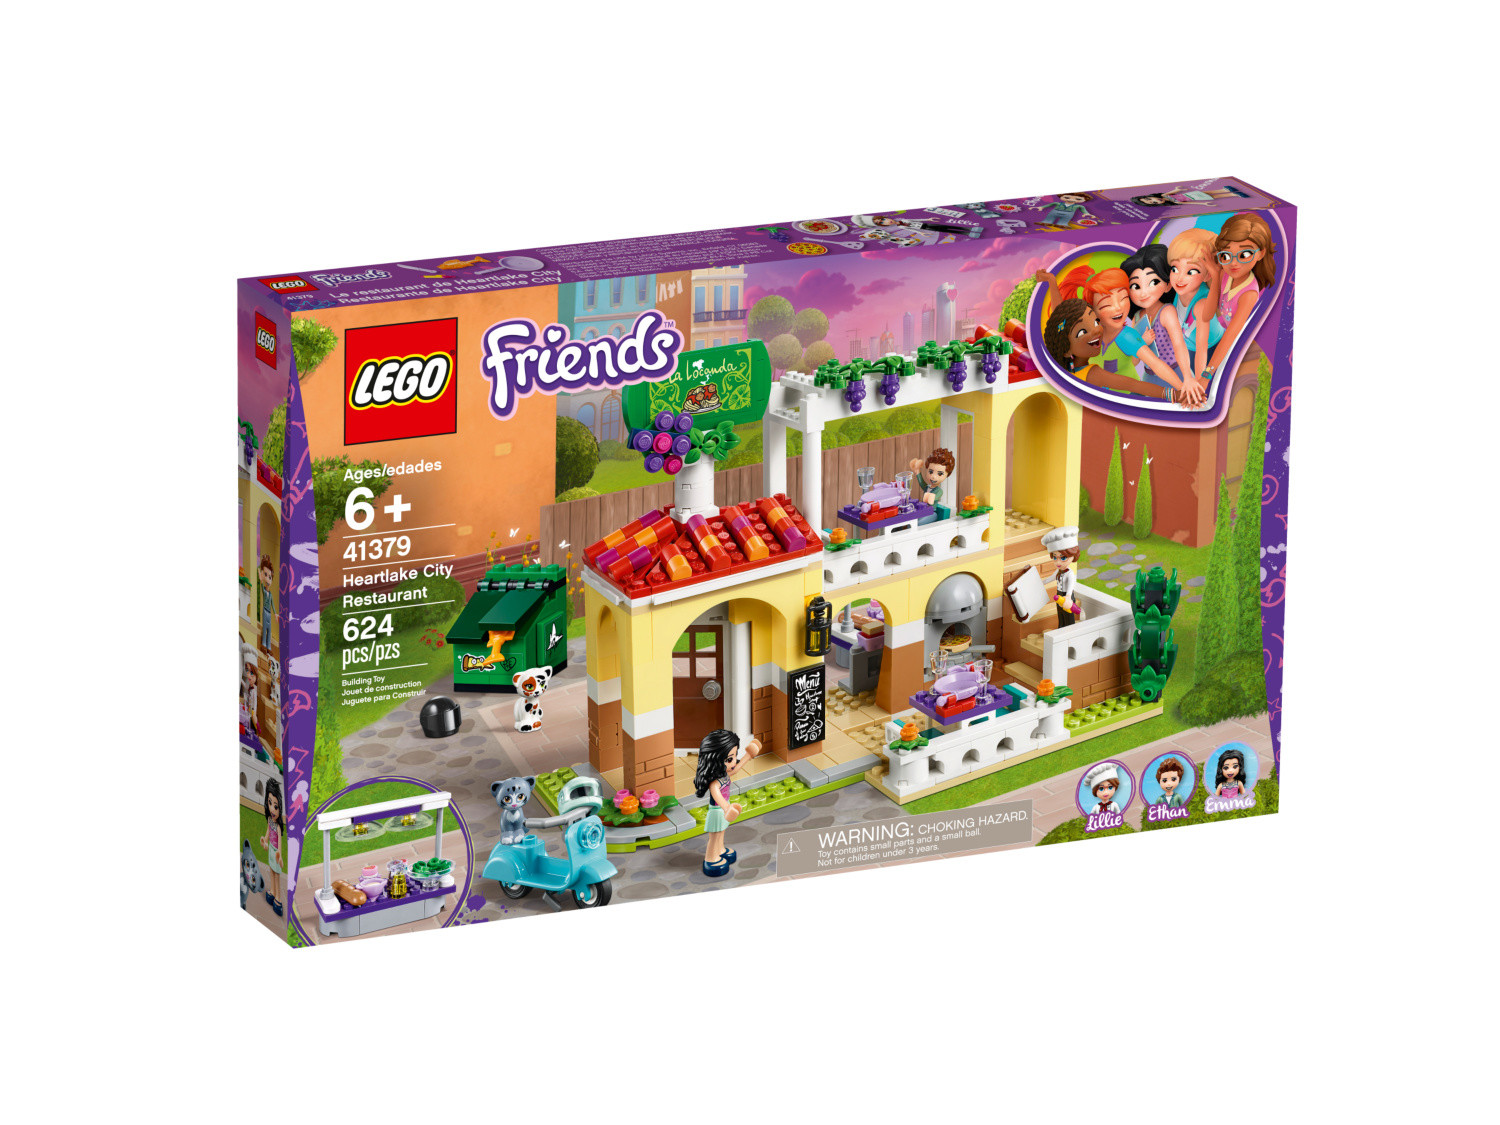 Heartlake City Restaurant - LEGO Friends set 41379